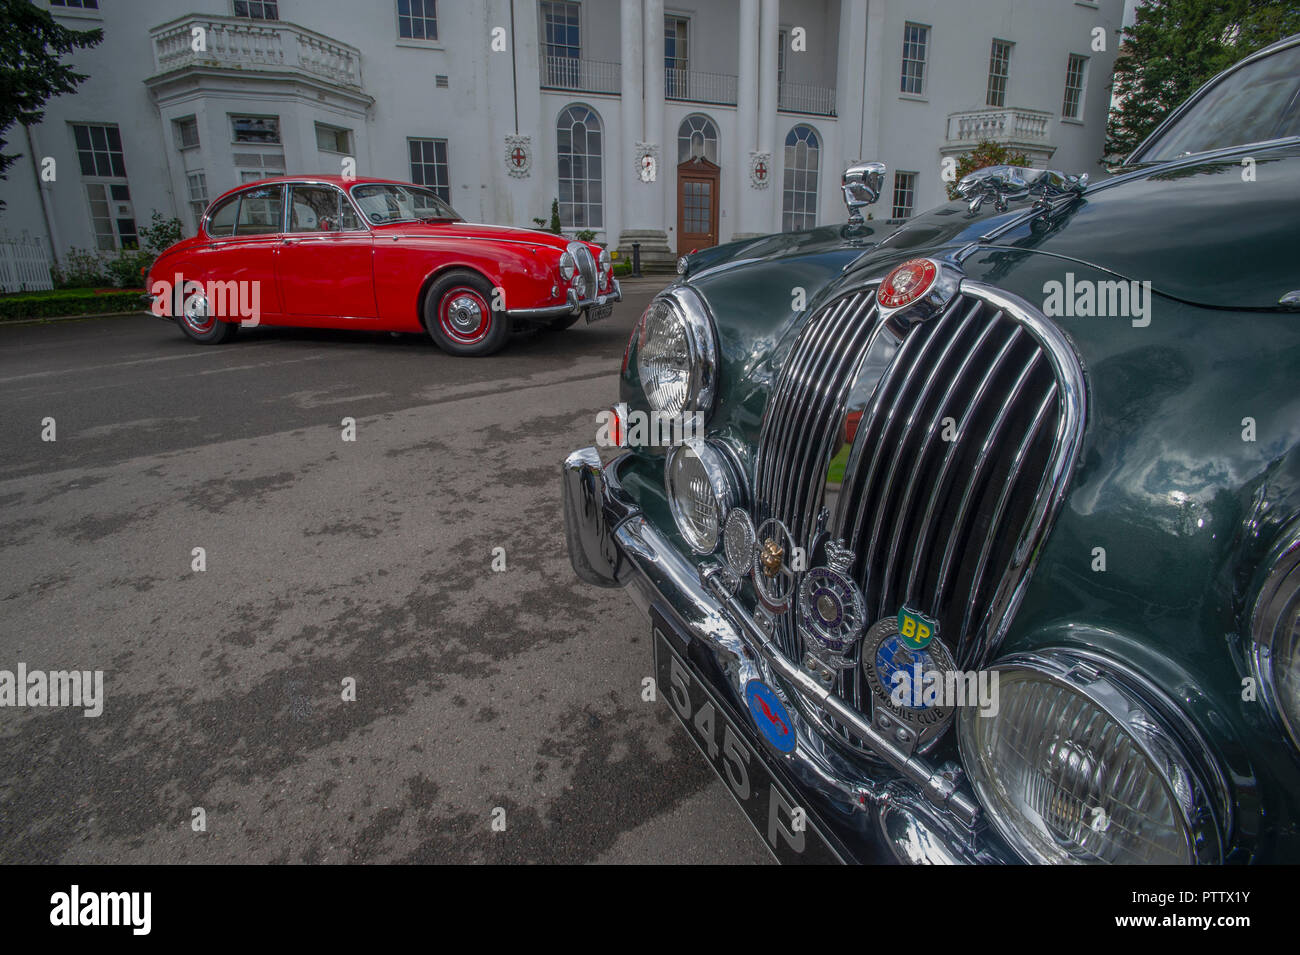 Mk2 Jaguar and Daimler V8 classic cars, badge engineered to use the same bodyshell Stock Photo